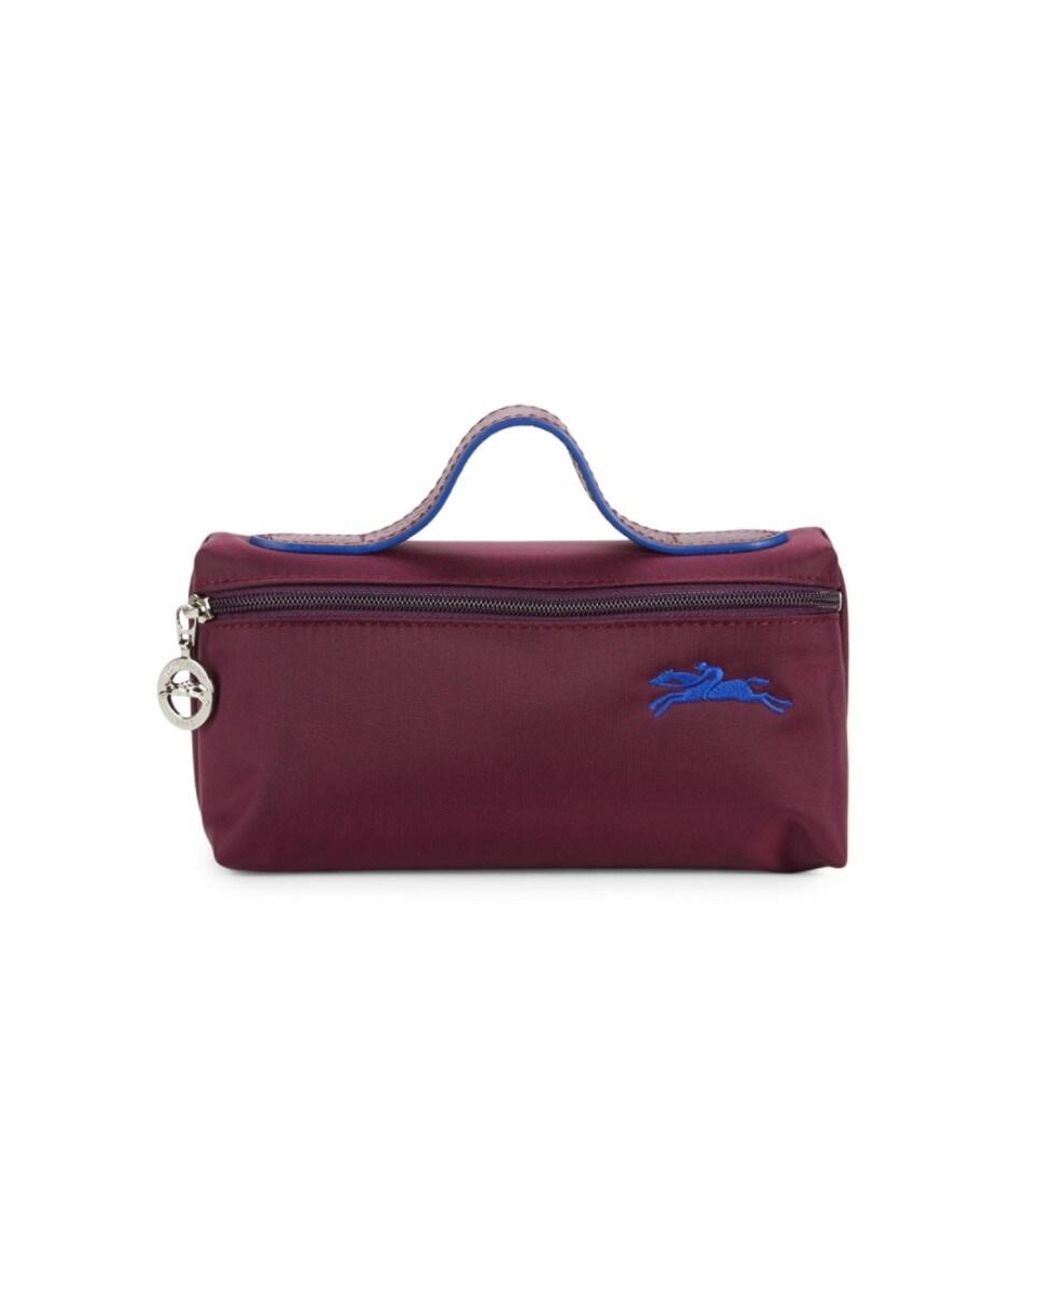 Longchamp, Bags, Longchamp Cosmetic Bag